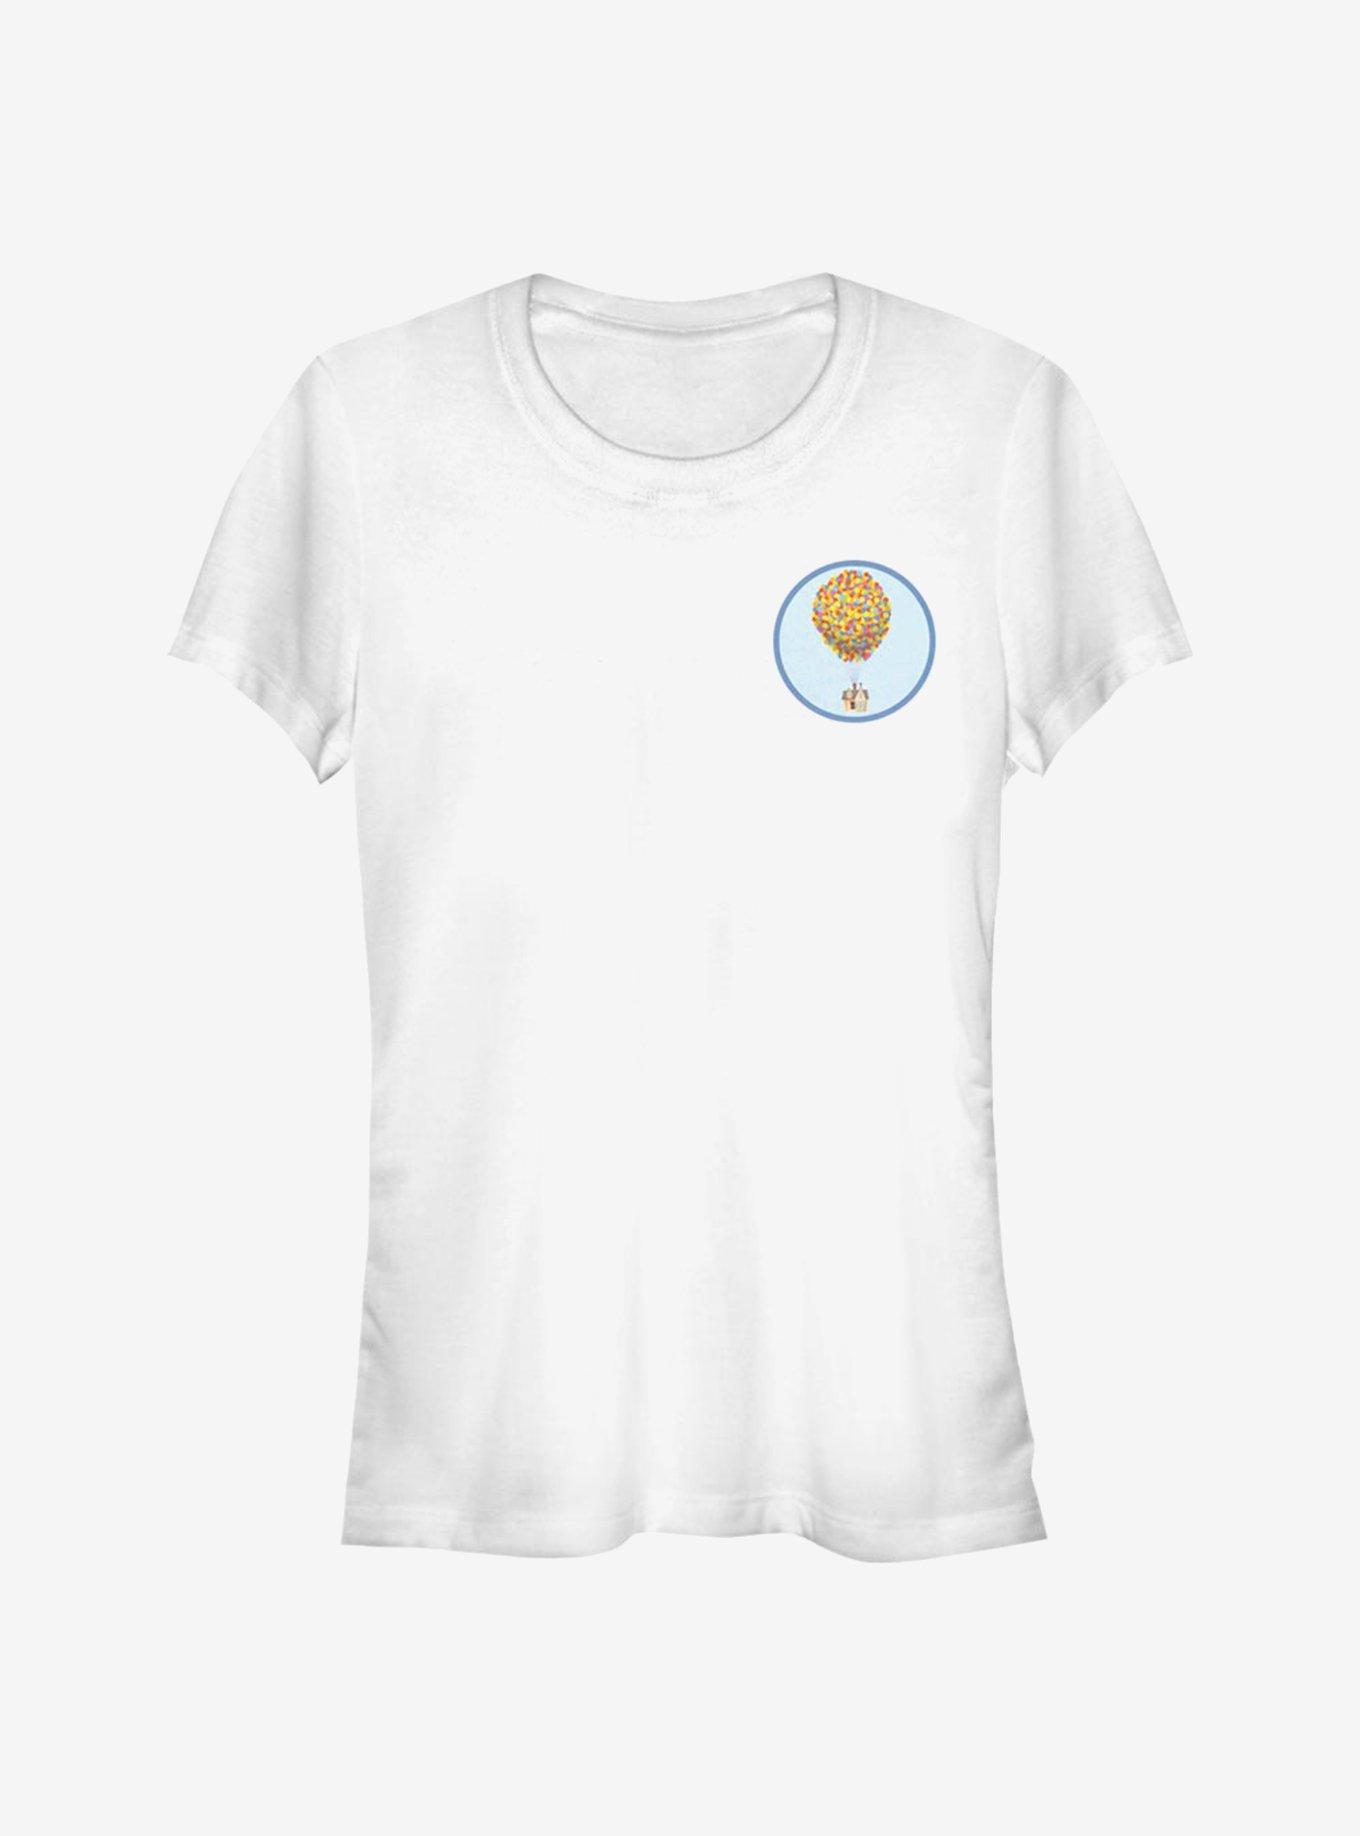 Disney Pixar Up House Badge Girls T-Shirt, WHITE, hi-res